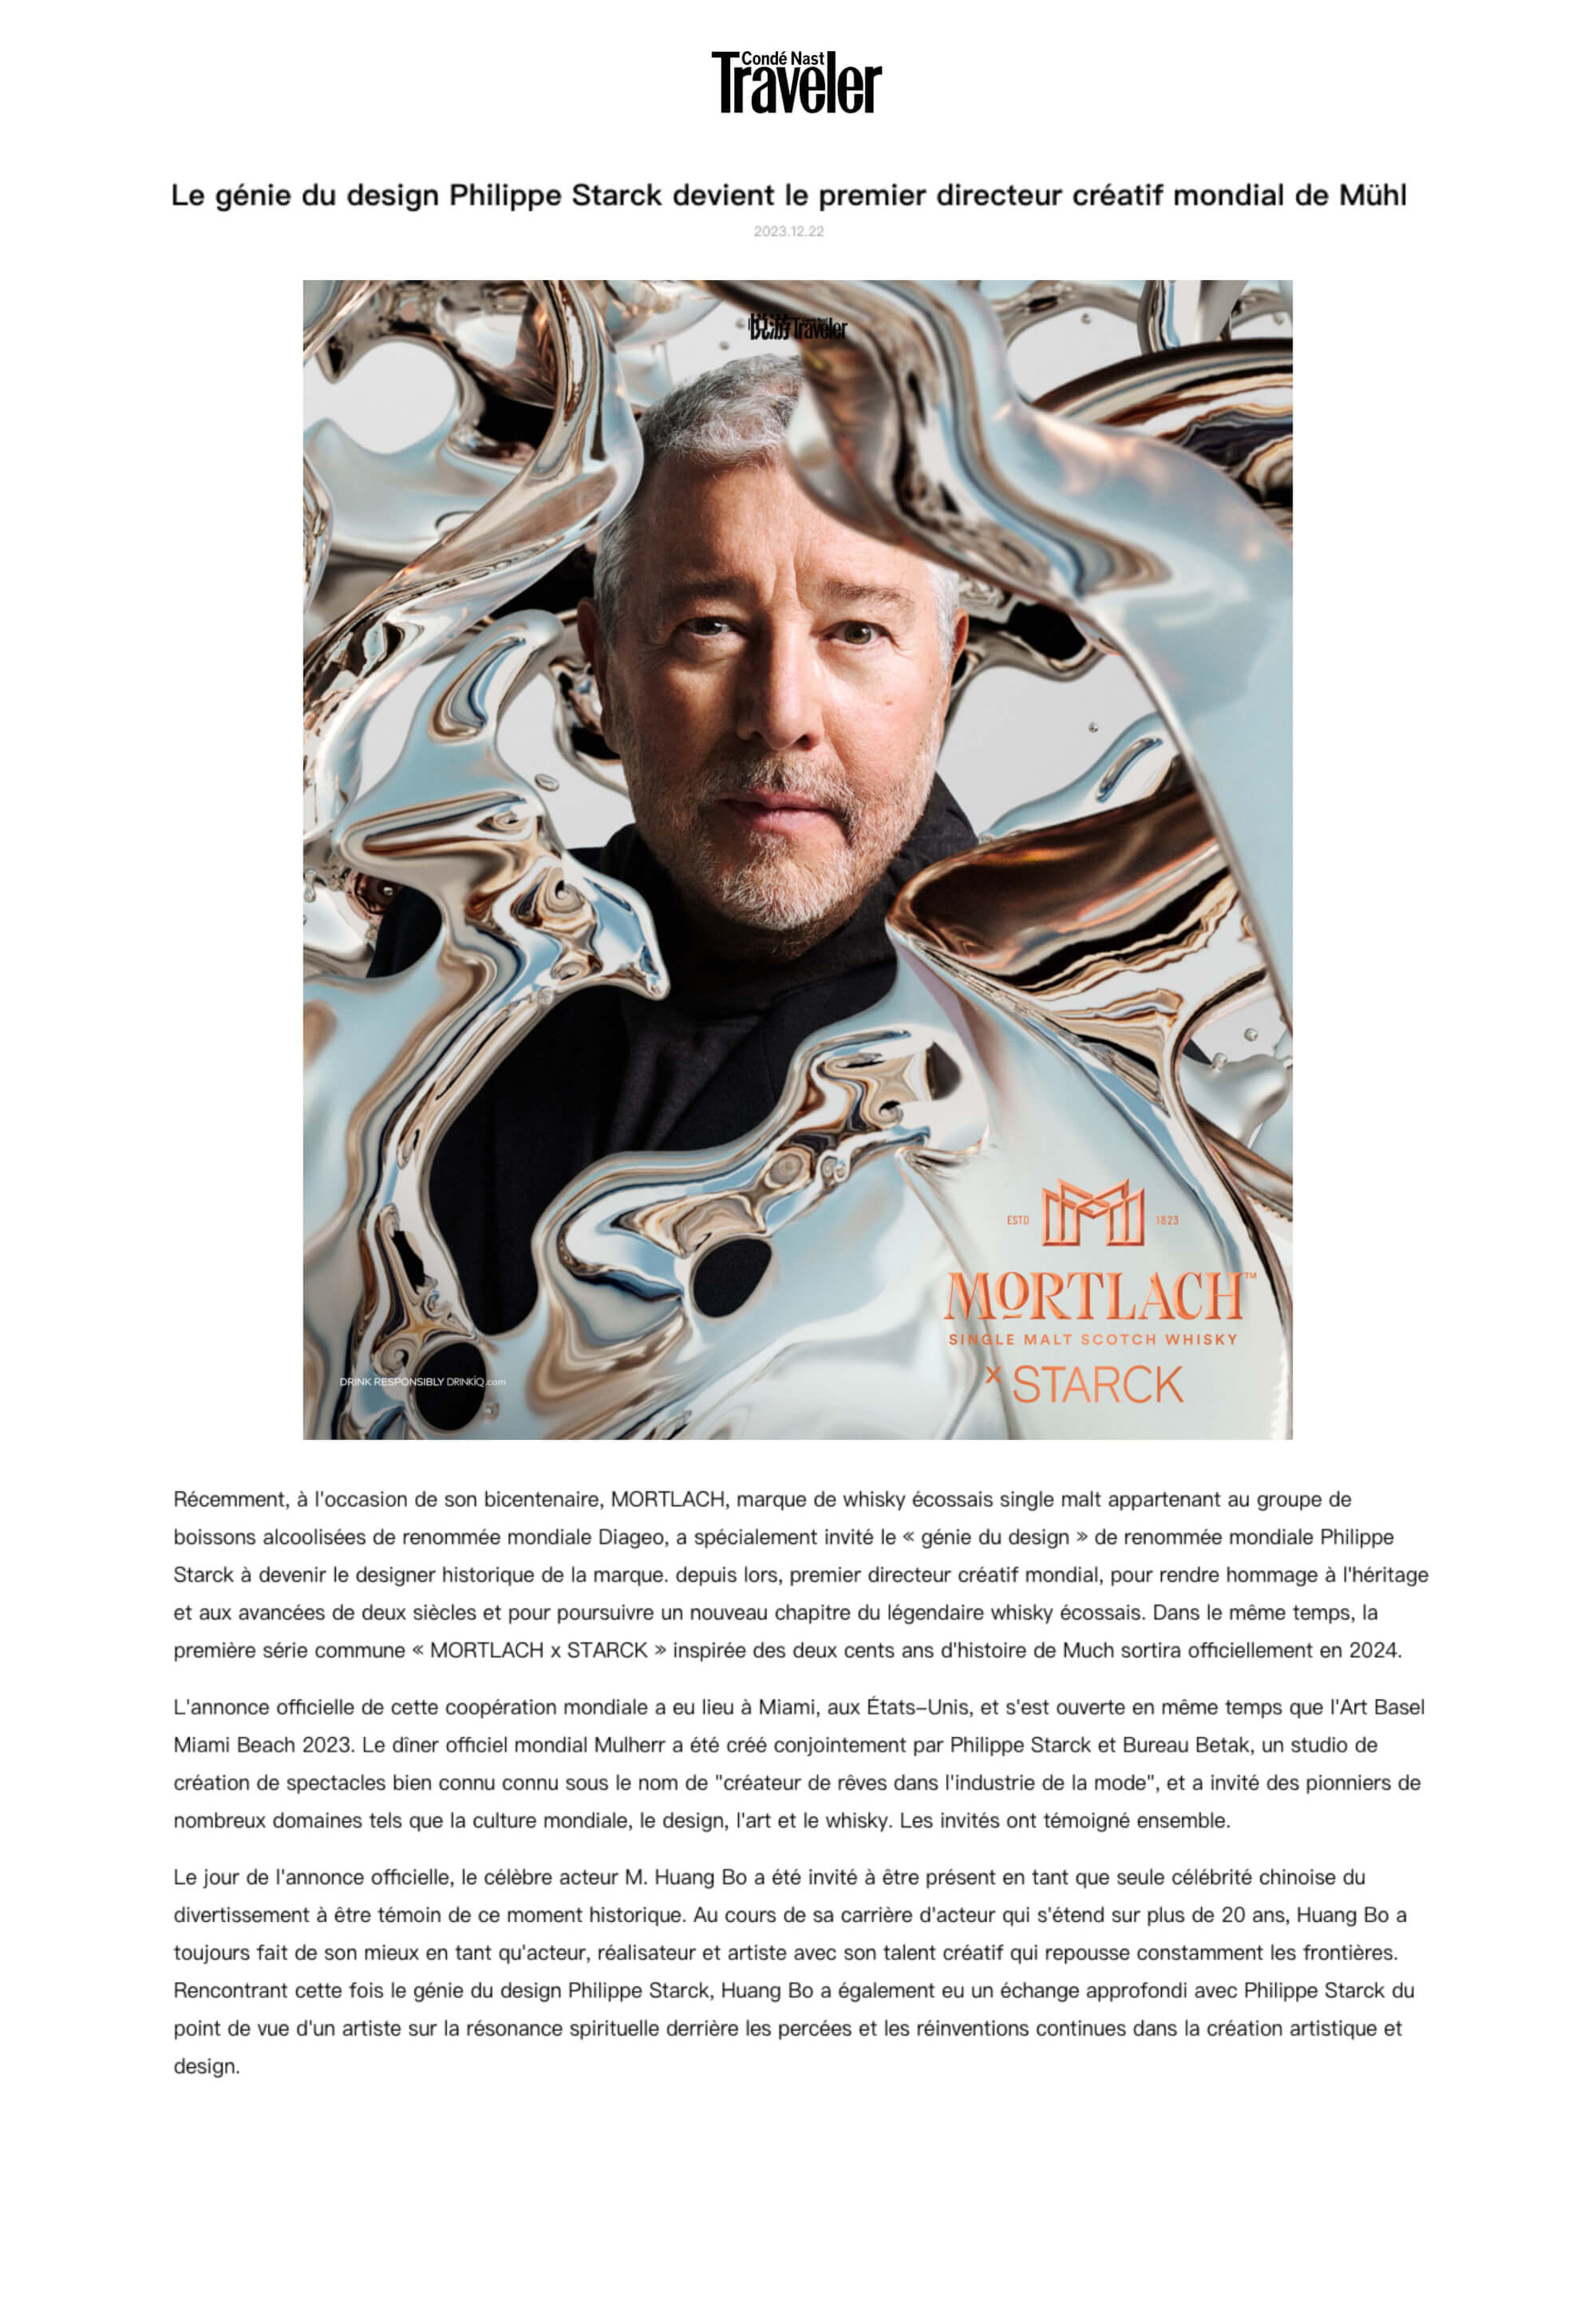 Design guru Philippe Starck becomes Mortlach's first global creative director